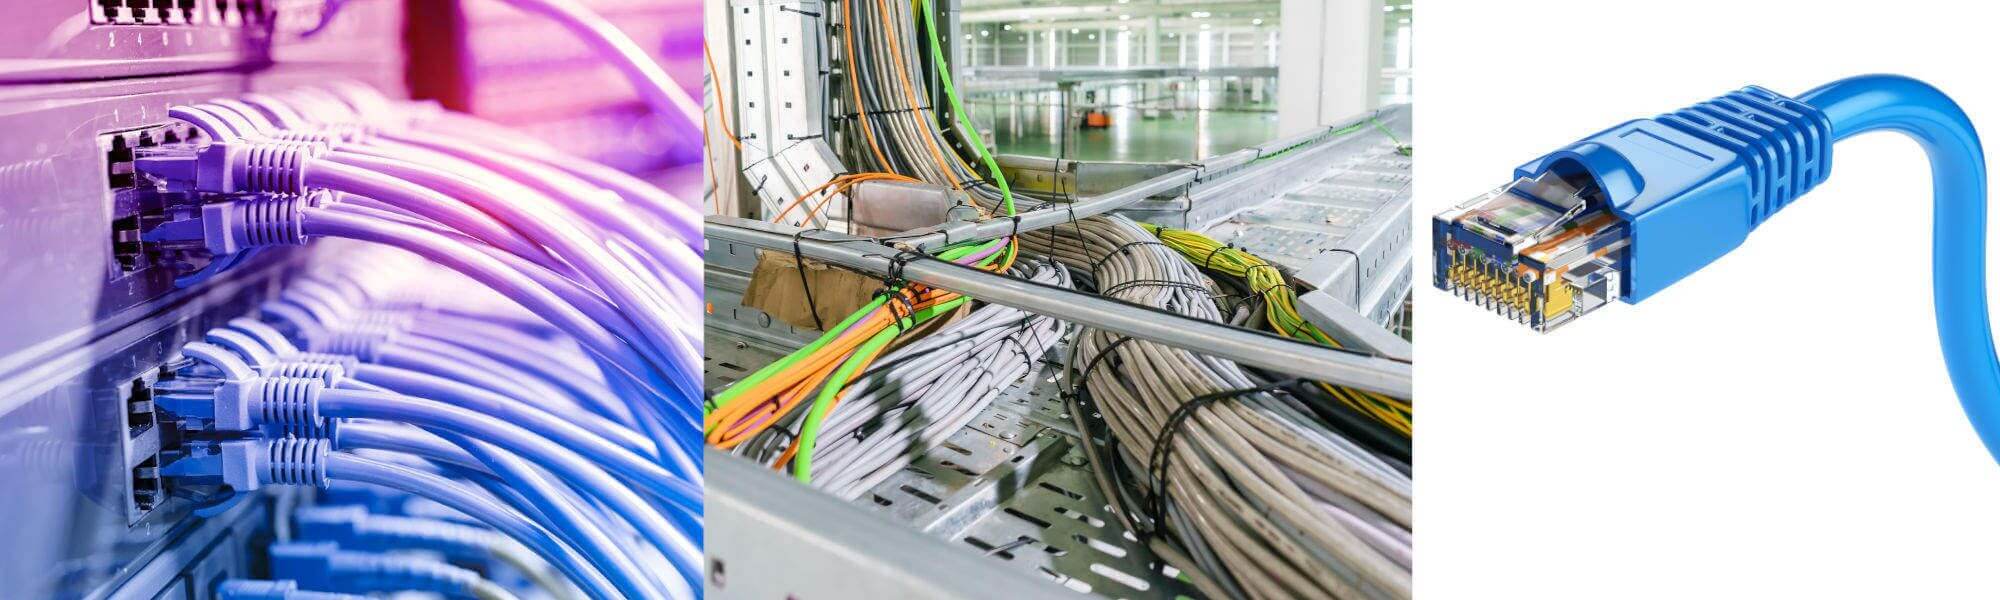 instrumentation control cables